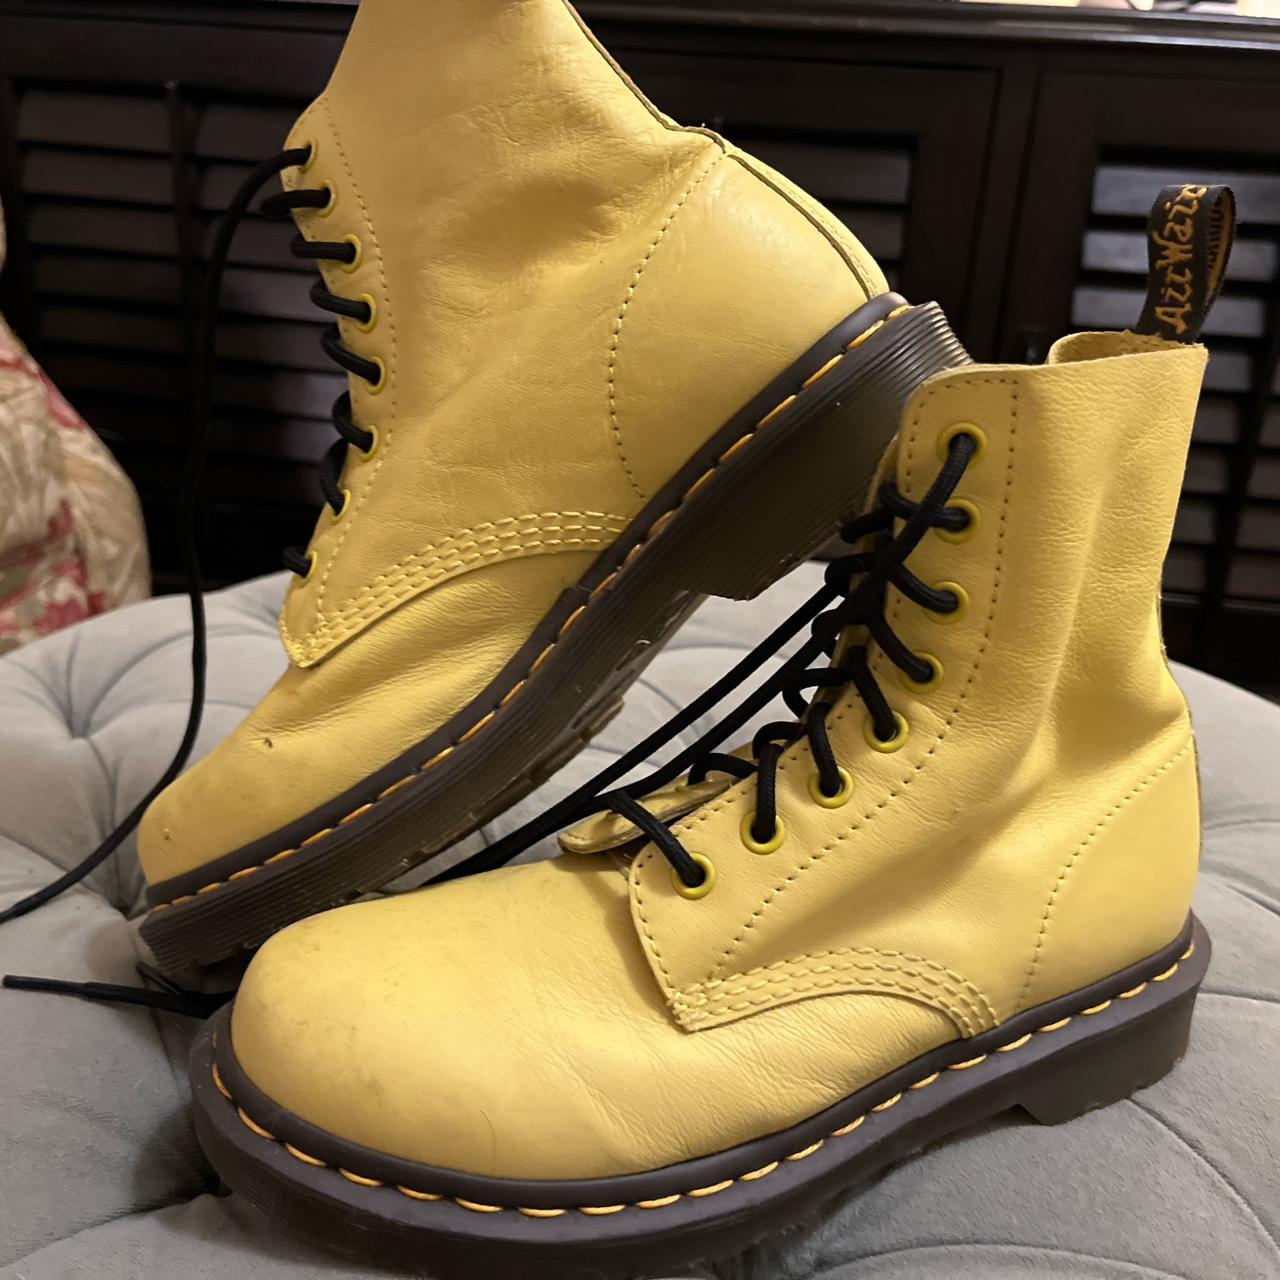 Dr. Martens Women's Yellow Boots